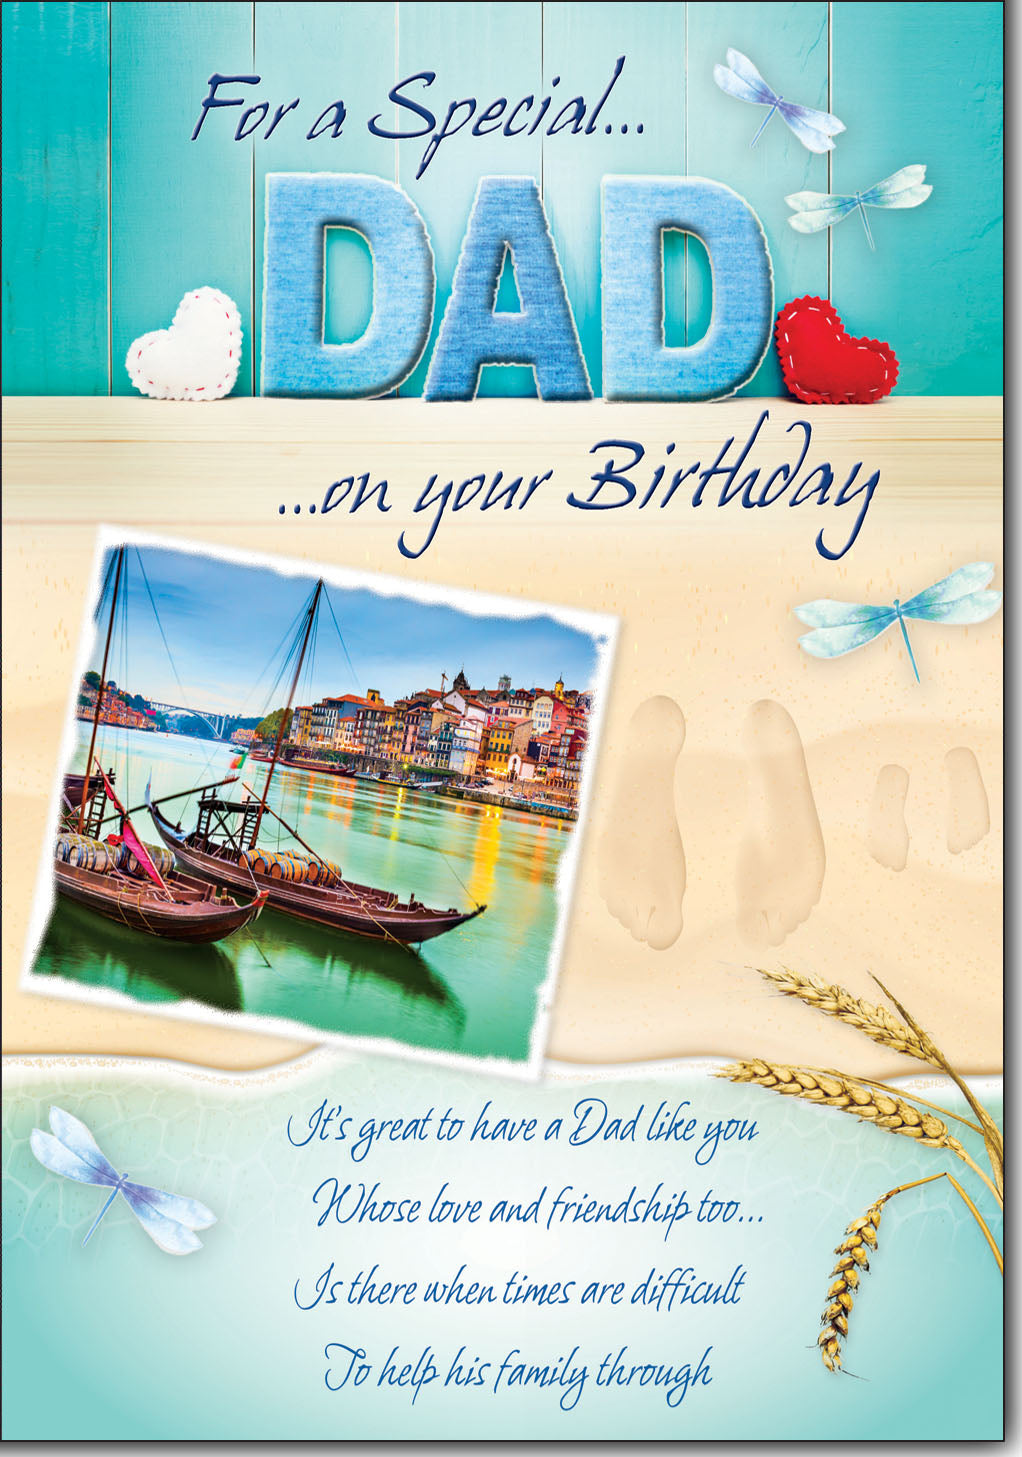 Dad birthday card - seaside resort